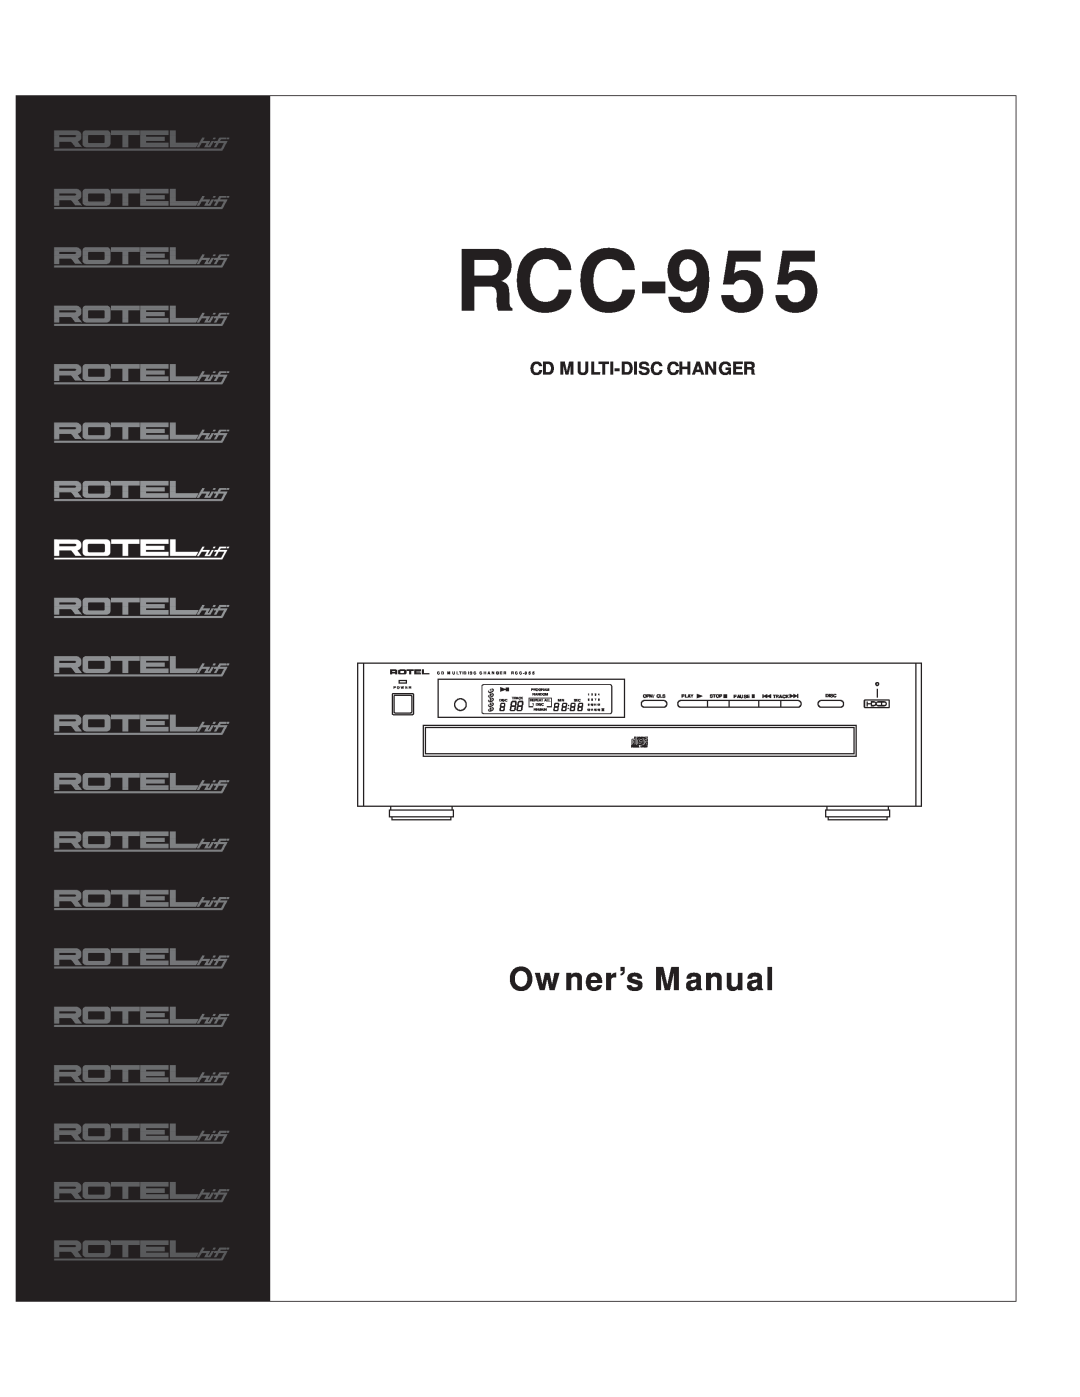 Rotel owner manual Cd Multi-Discchanger, Opn/Cls, Play, Stop, Pause, Track, CD MULTIDISC CHANGER RCC-955, Power 